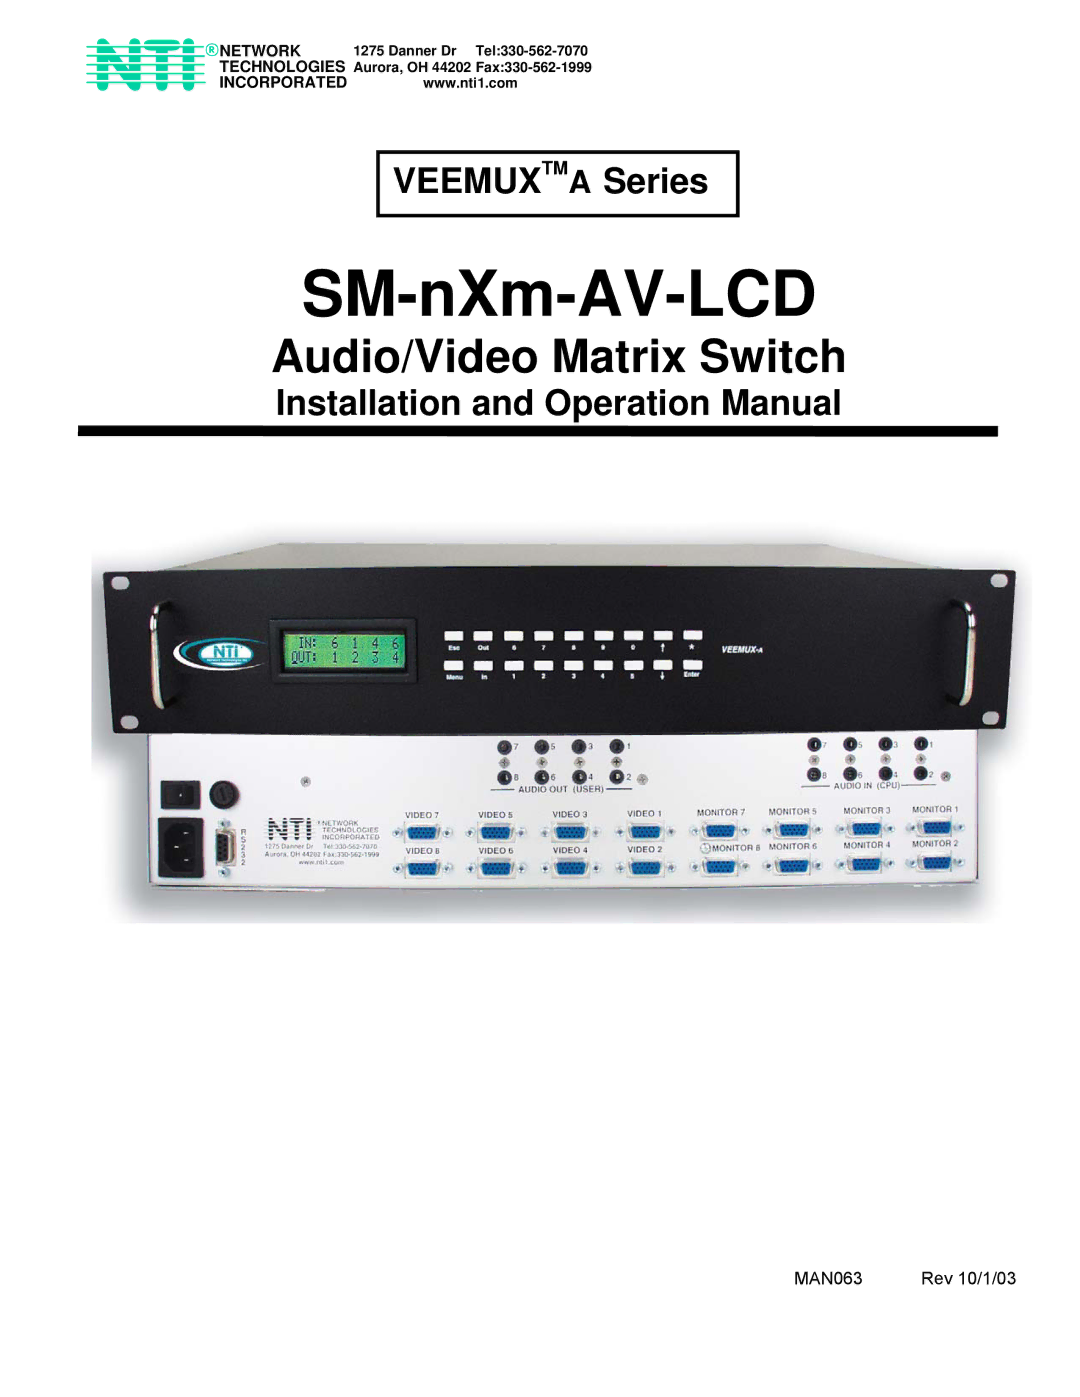 Network Technologies SM-nXm-AV-LCD operation manual Nti 